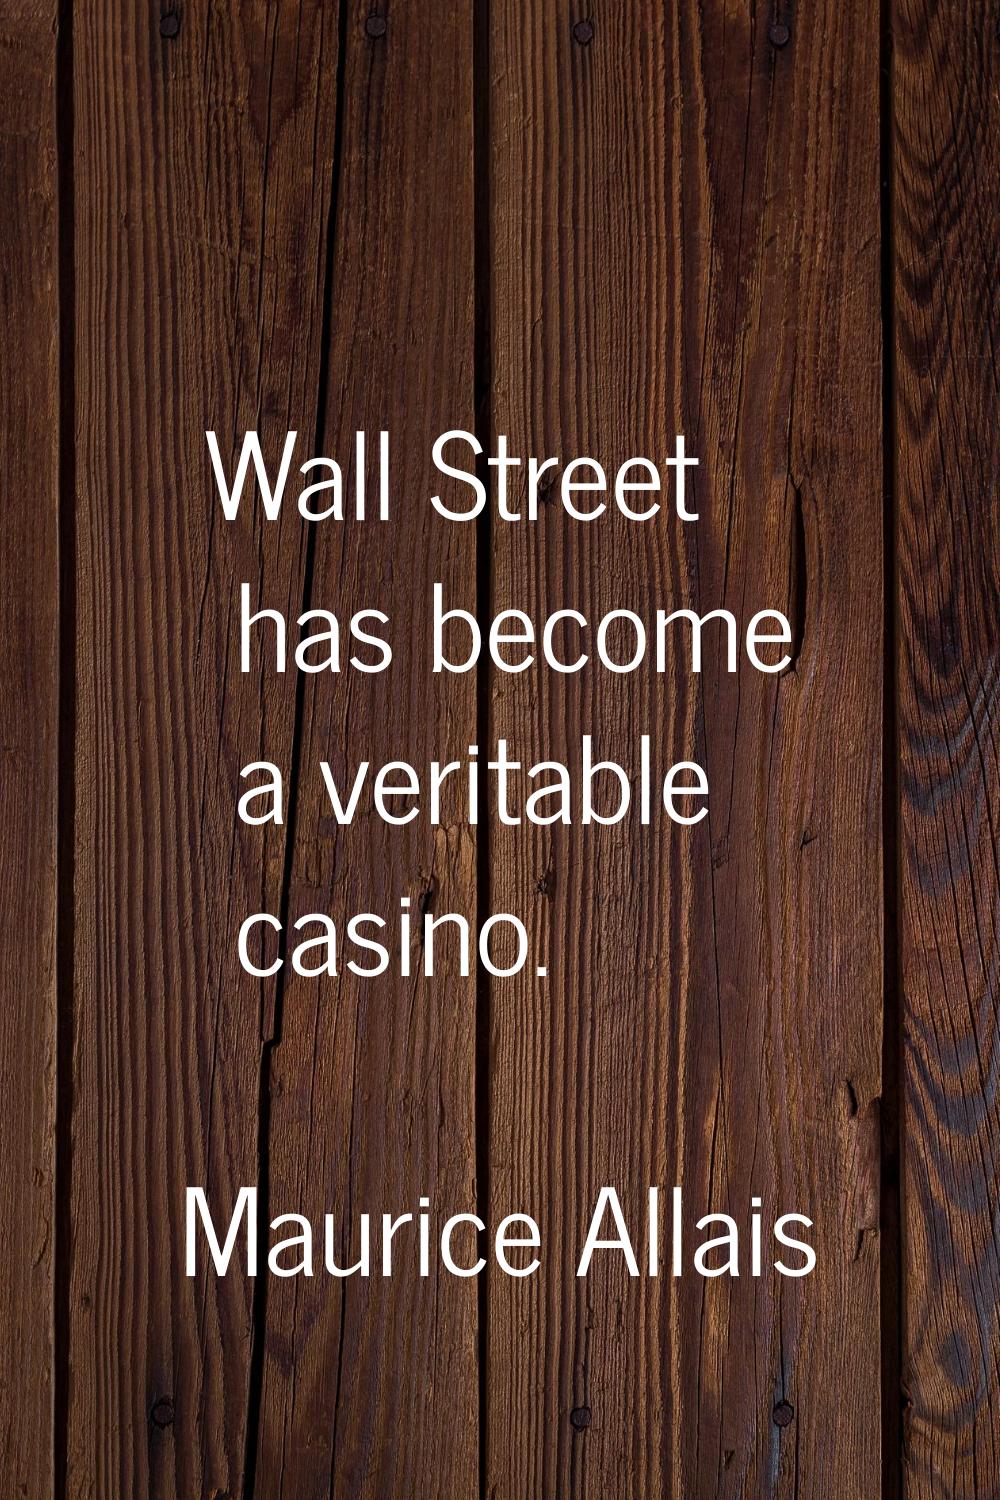 Wall Street has become a veritable casino.